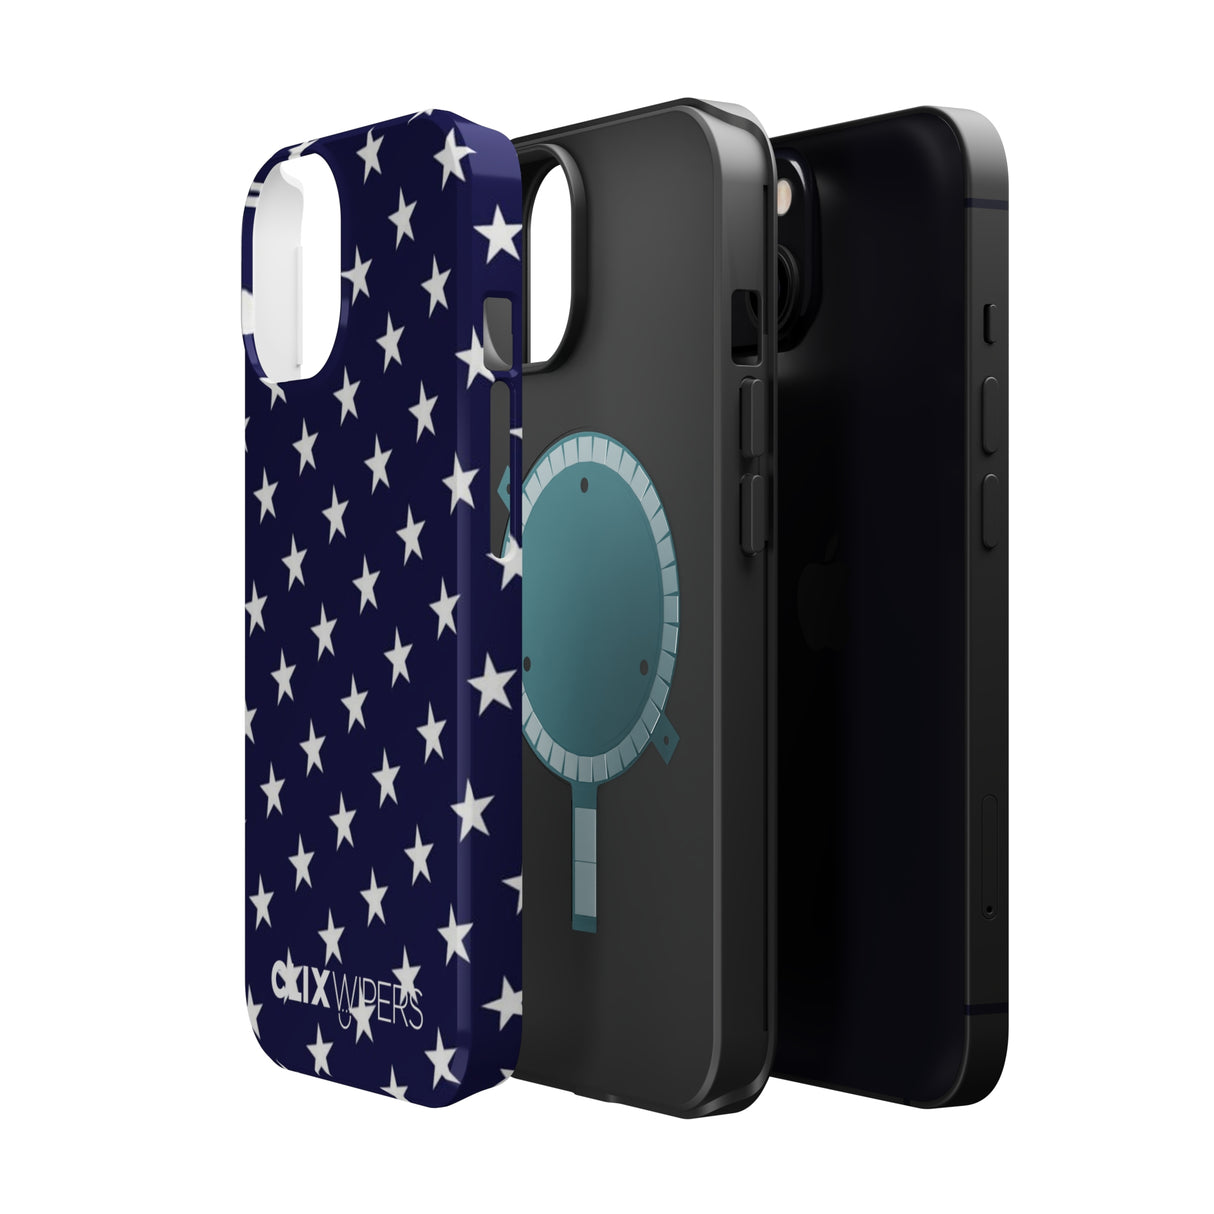 Stars MagSafe iPhone Case